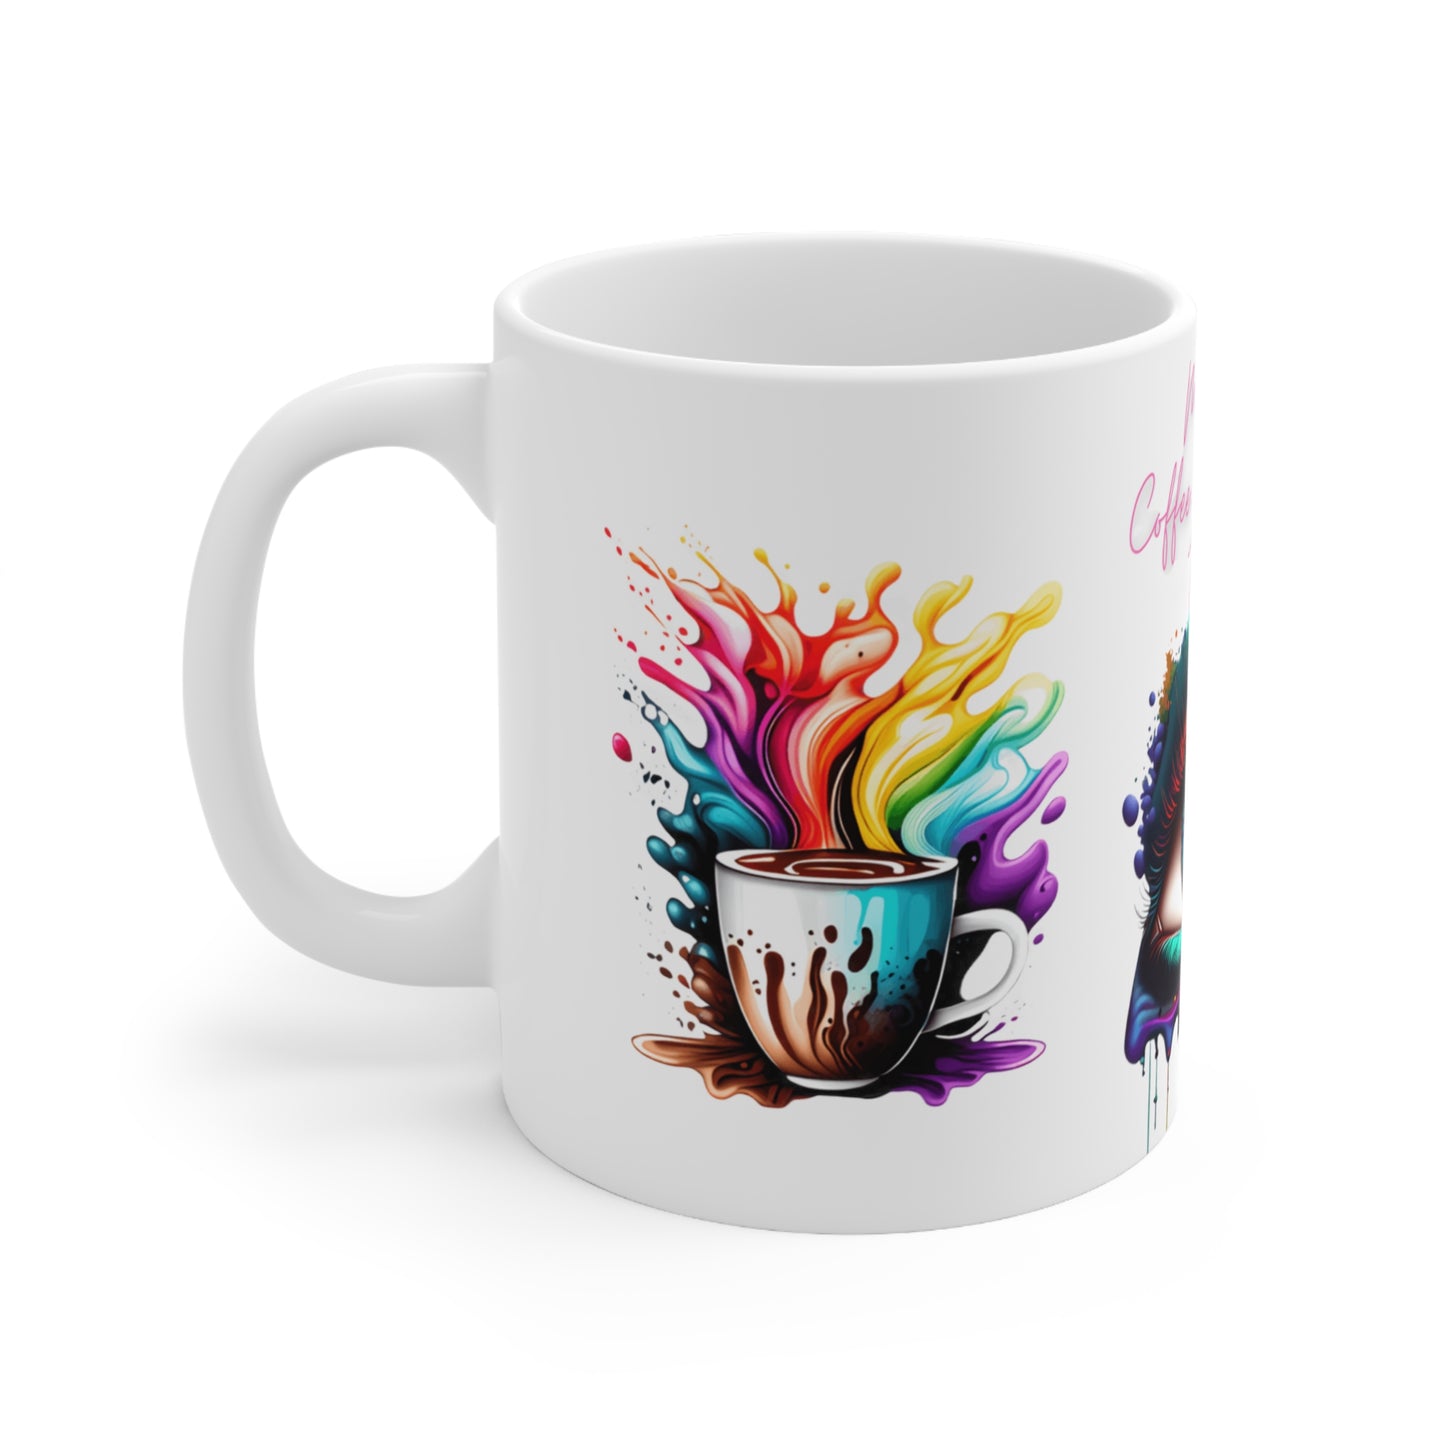 "Mood for COFFEE, BOOKS and TEARS" Colorful Mug - Book Lovers Mug - Mugscity - Free Shipping